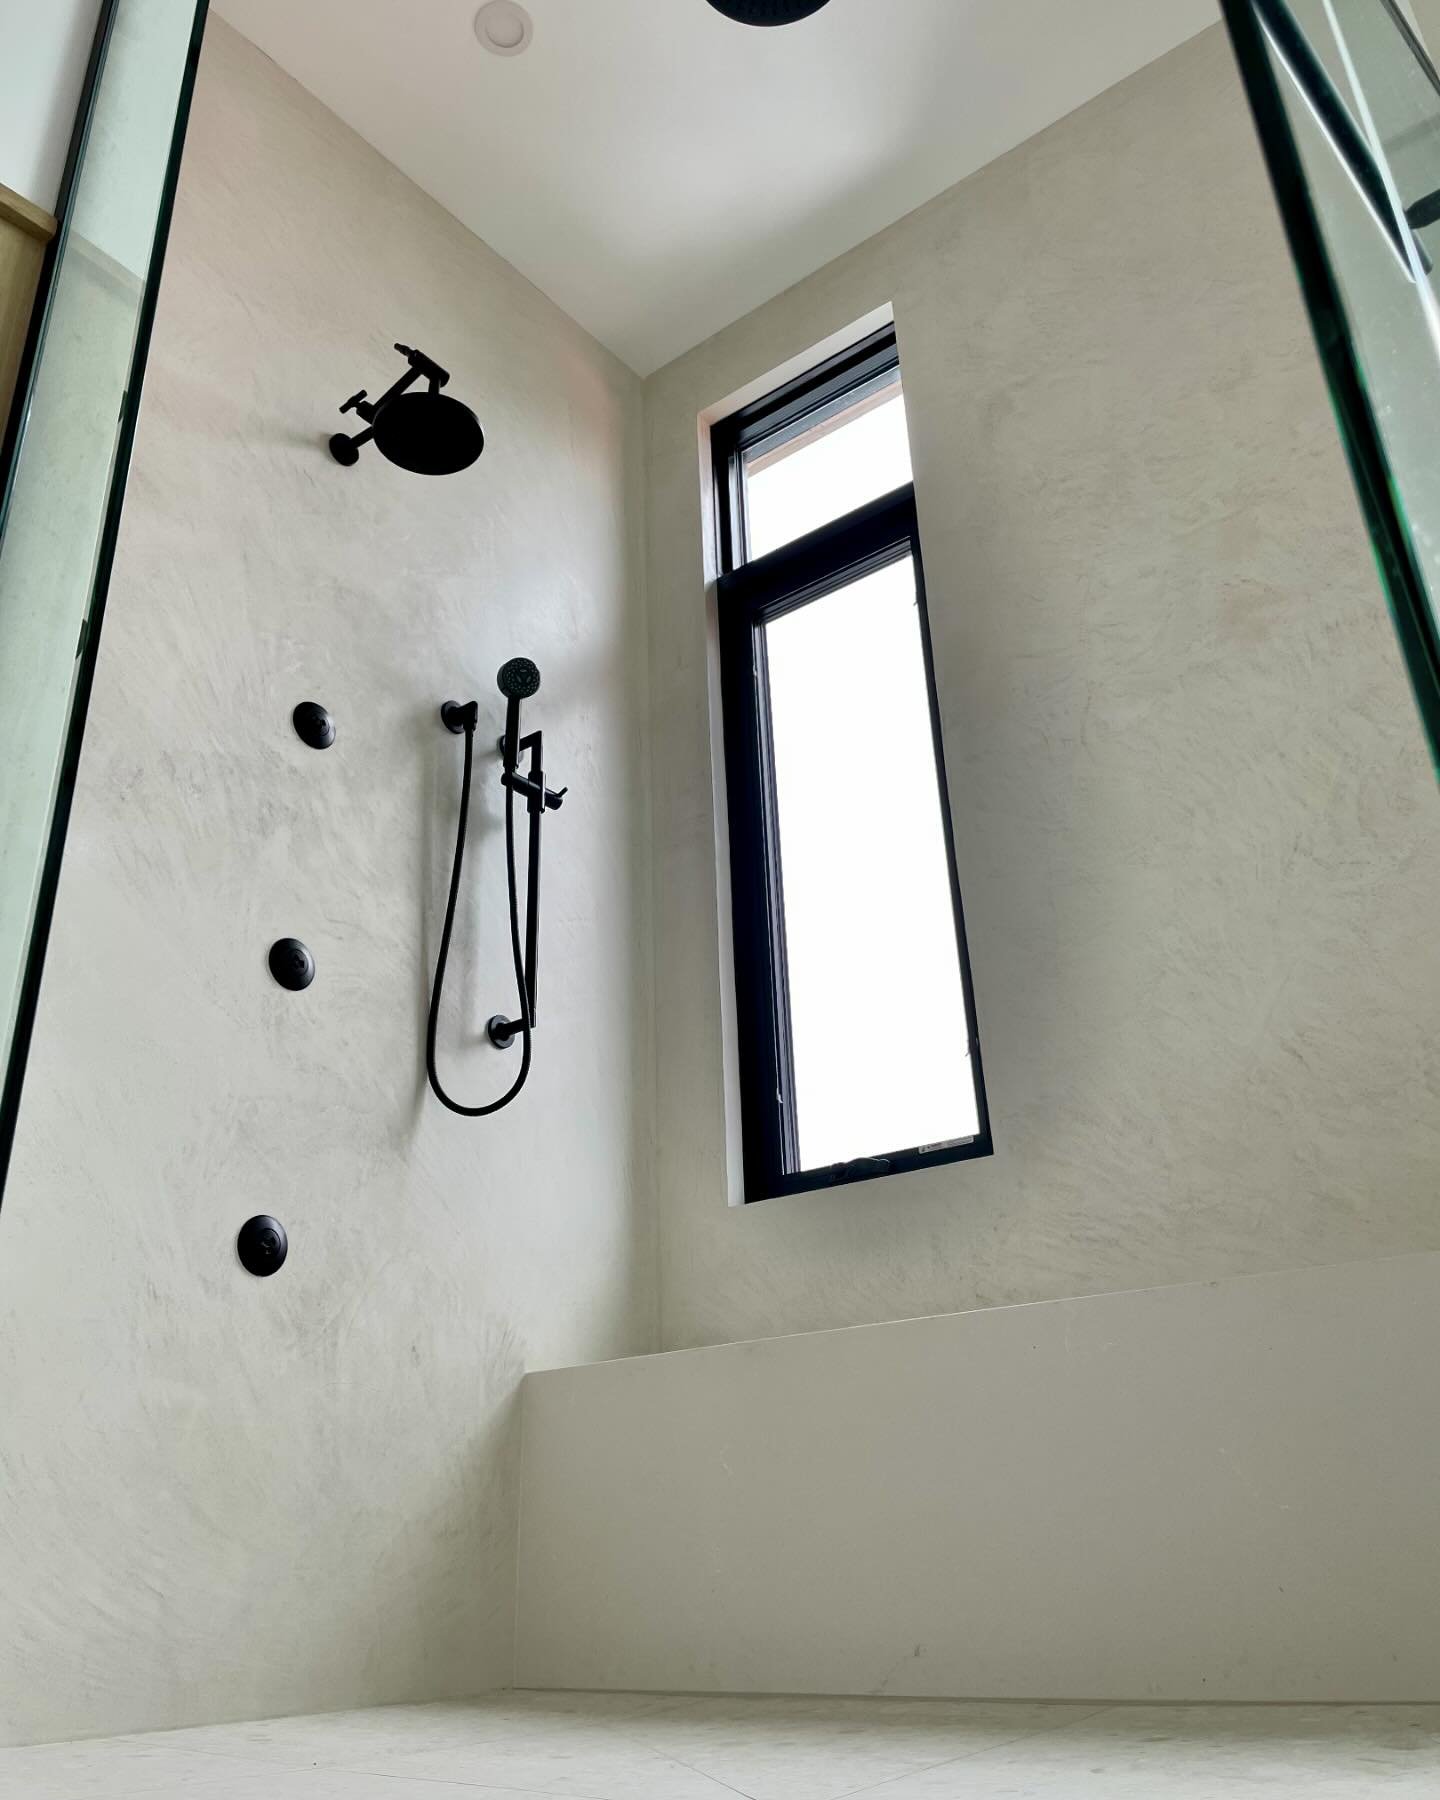 Basking in the serene charm of this Tadelakt shower &ndash; where nature&rsquo;s touch meets timeless elegance. 🌿✨

@dluxdesignandco 
#lime #plaster #limepaster #earthaus @earthaus.plaster #seamless #design #interior #bathroom #shower #custom #textu